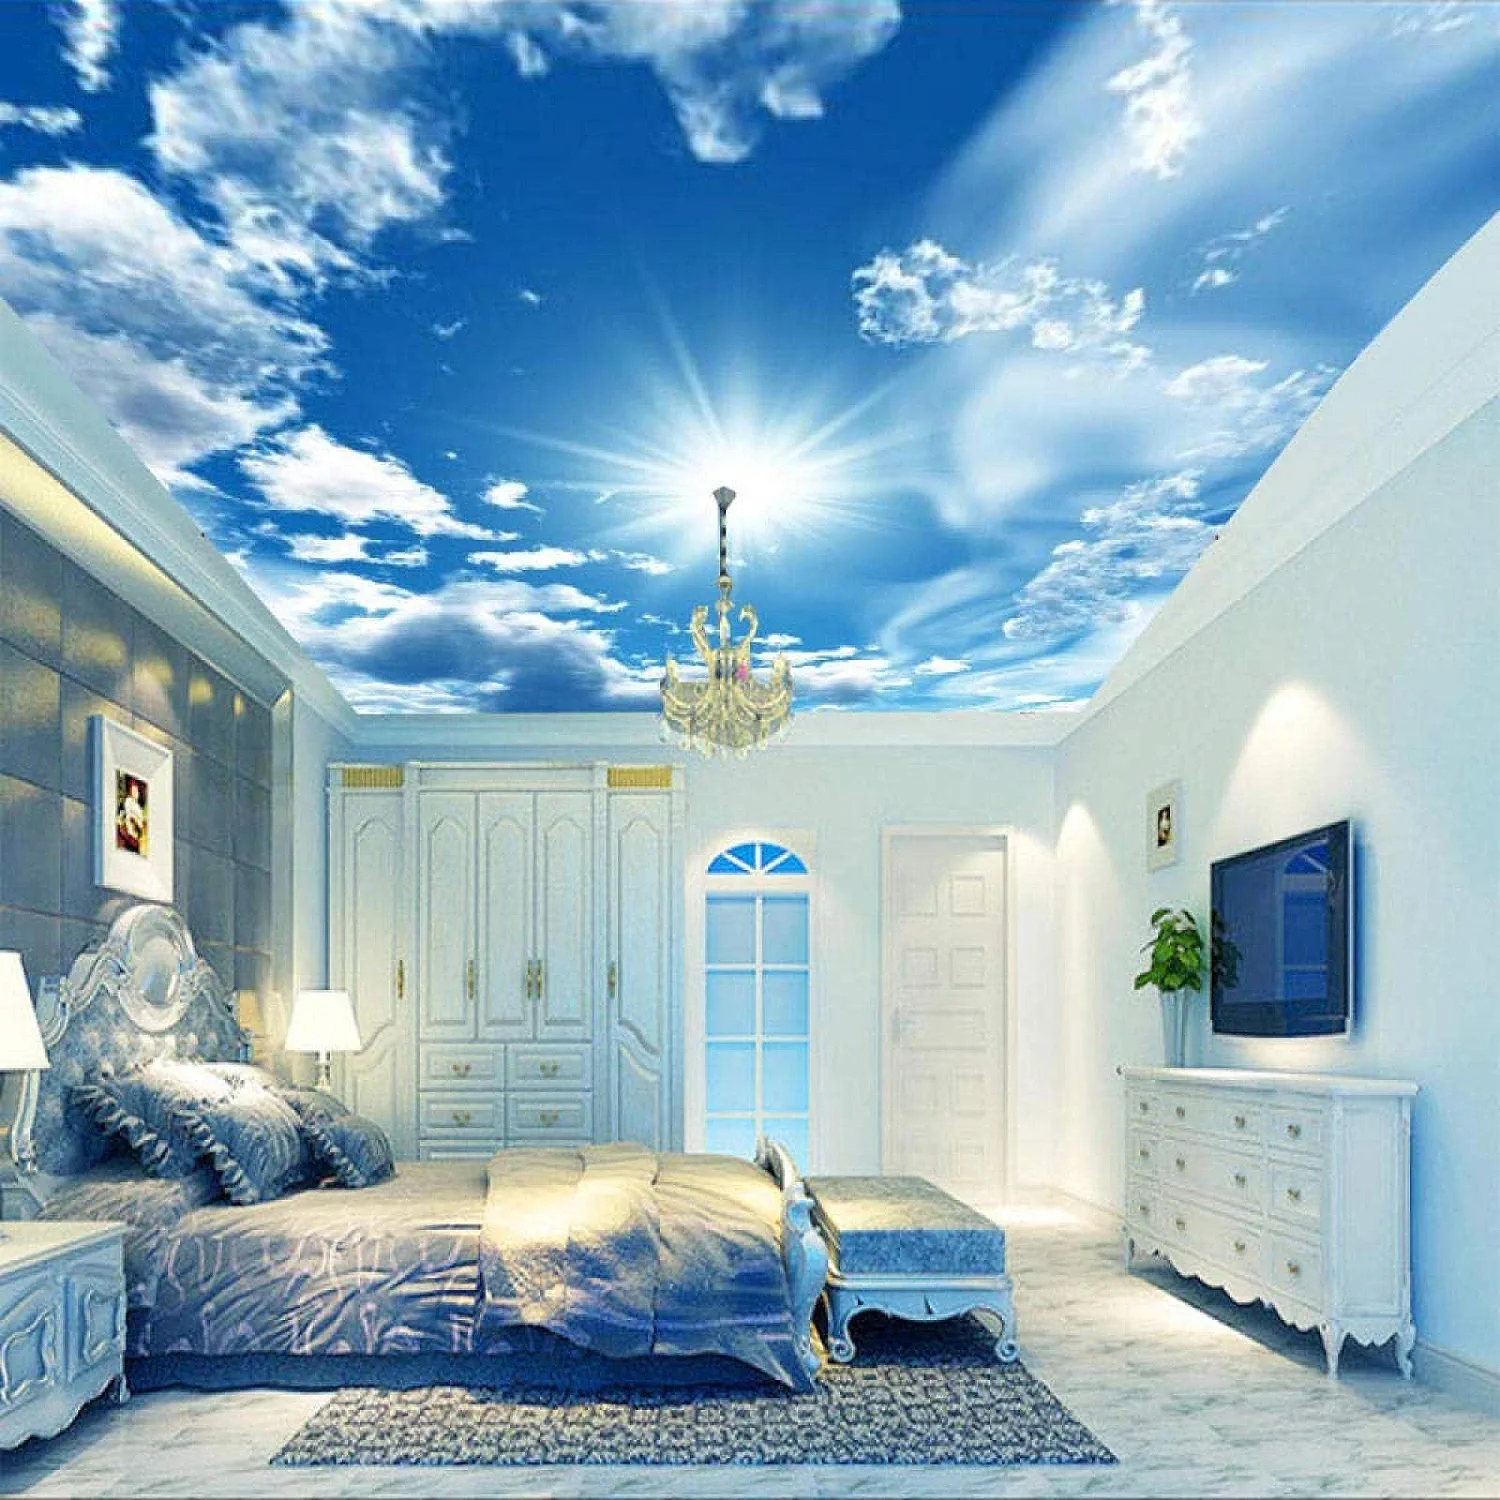 Cloudy sky of designer ceiling for bedroom - Modern Bedroom Ceiling Designs